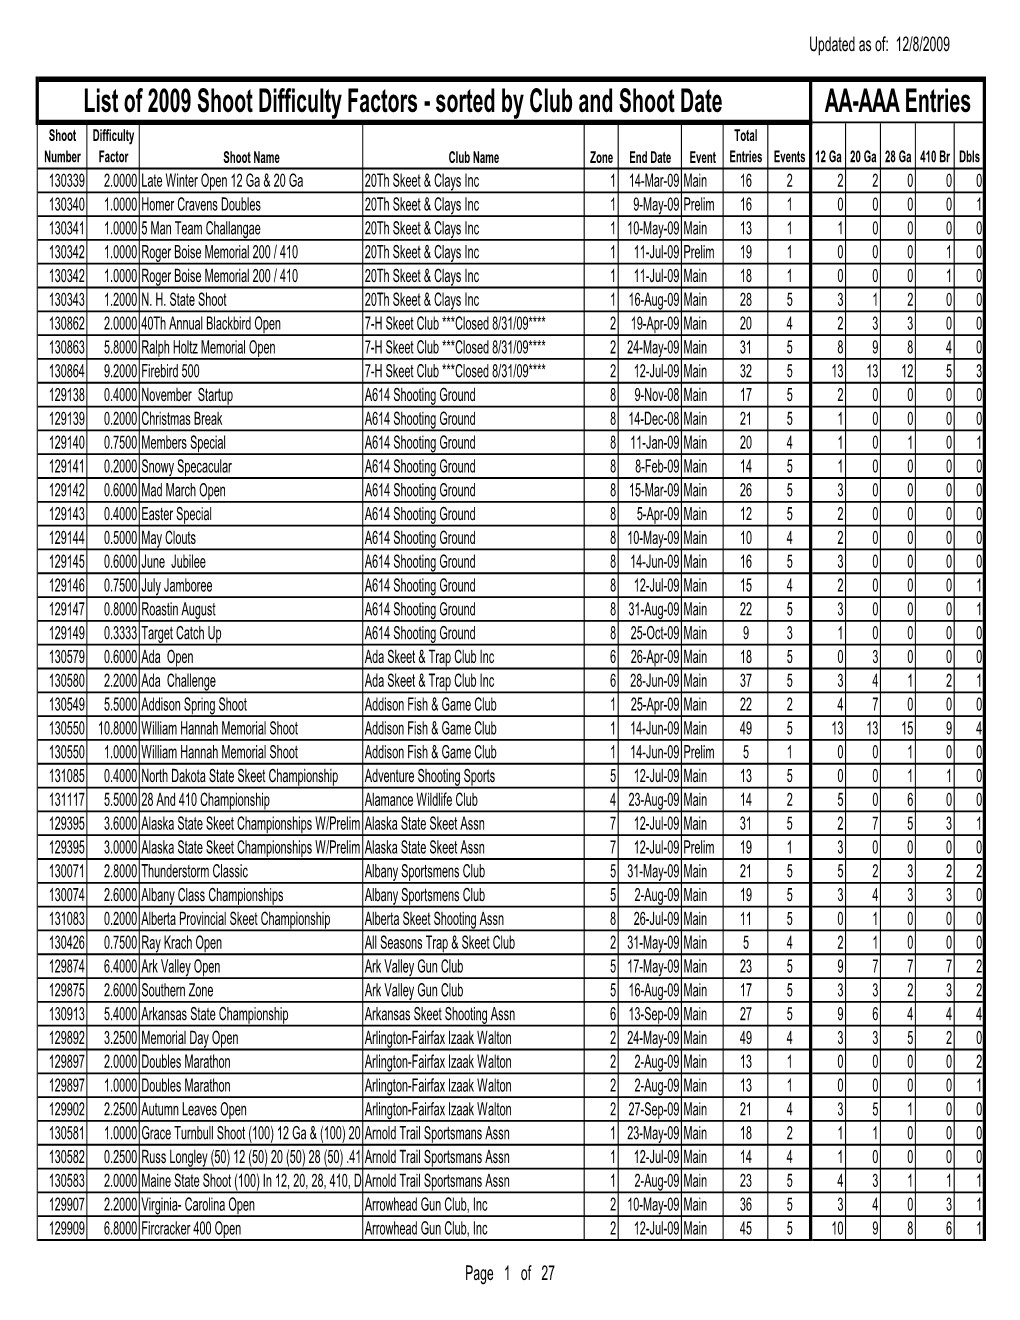 AA-AAA Entries List of 2009 Shoot Difficulty Factors